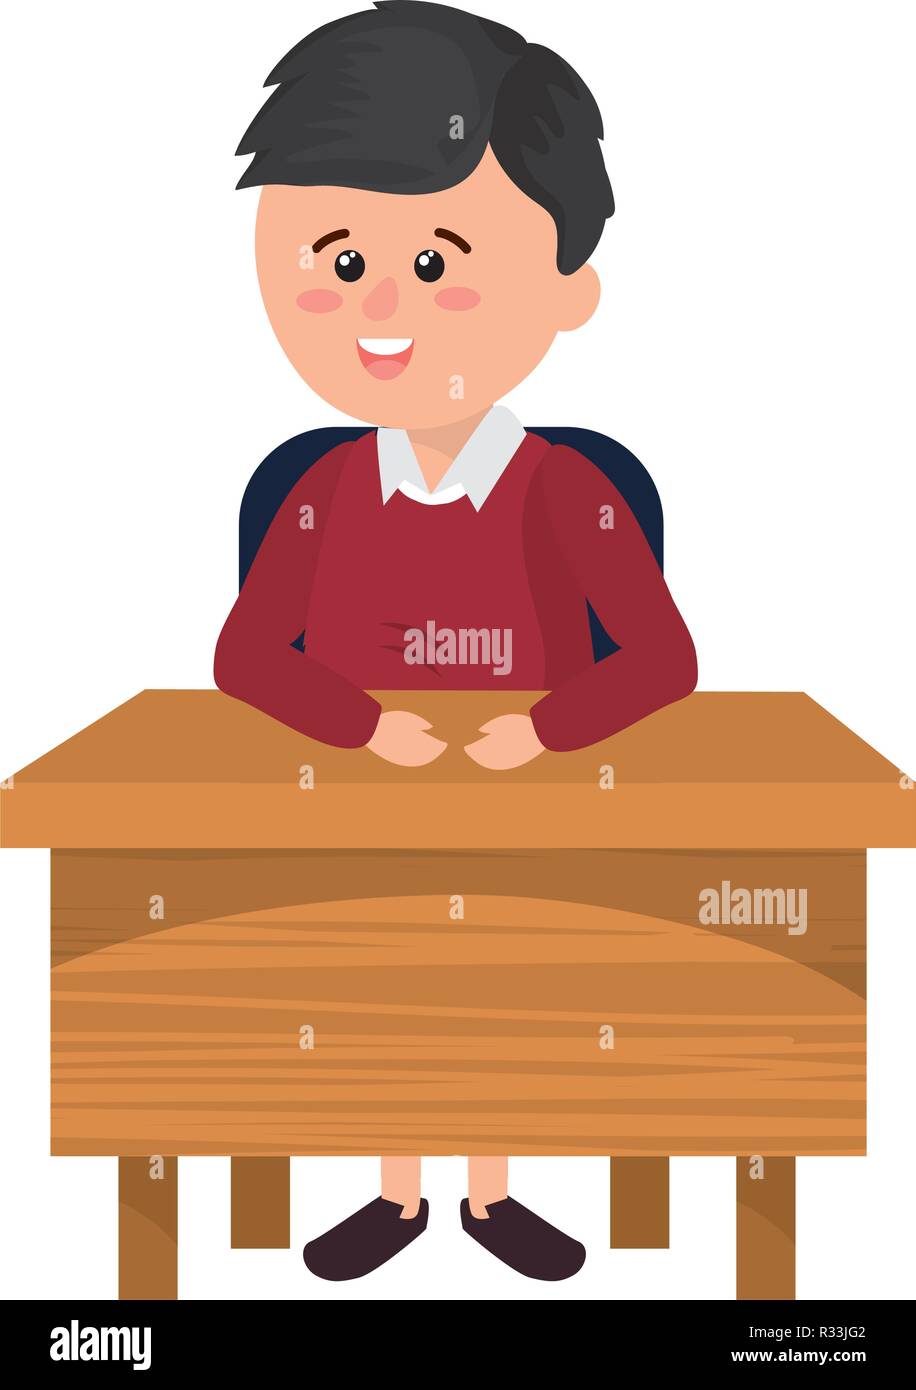 Elementary School Student Boy On The Desk Cartoon Vector